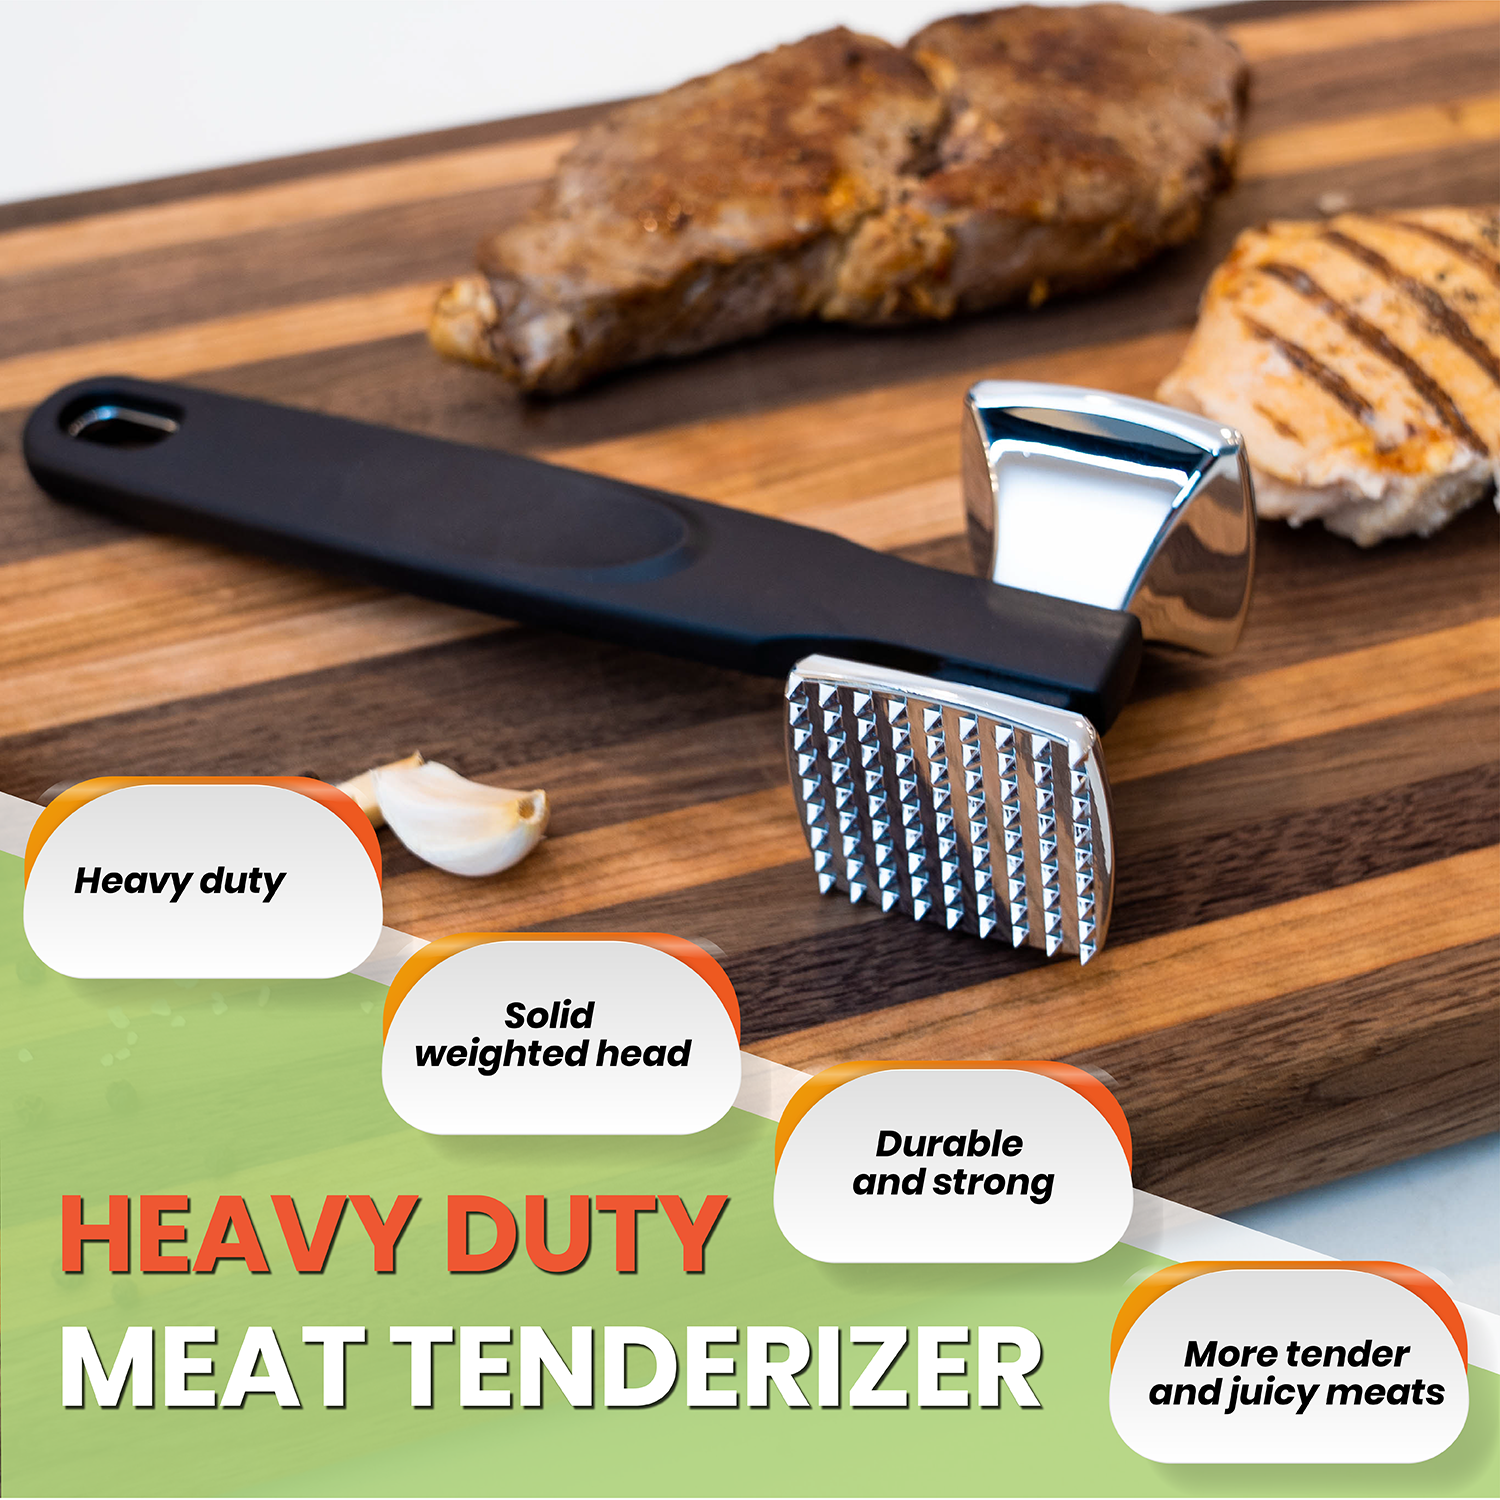 Meat Tenderizer Stainless Steel - Meat Hammer - Kitchen Meat Mallet - Heavy Duty Chicken, Meat Pounder Flattener Tool - Stainless Steel Double-Sided